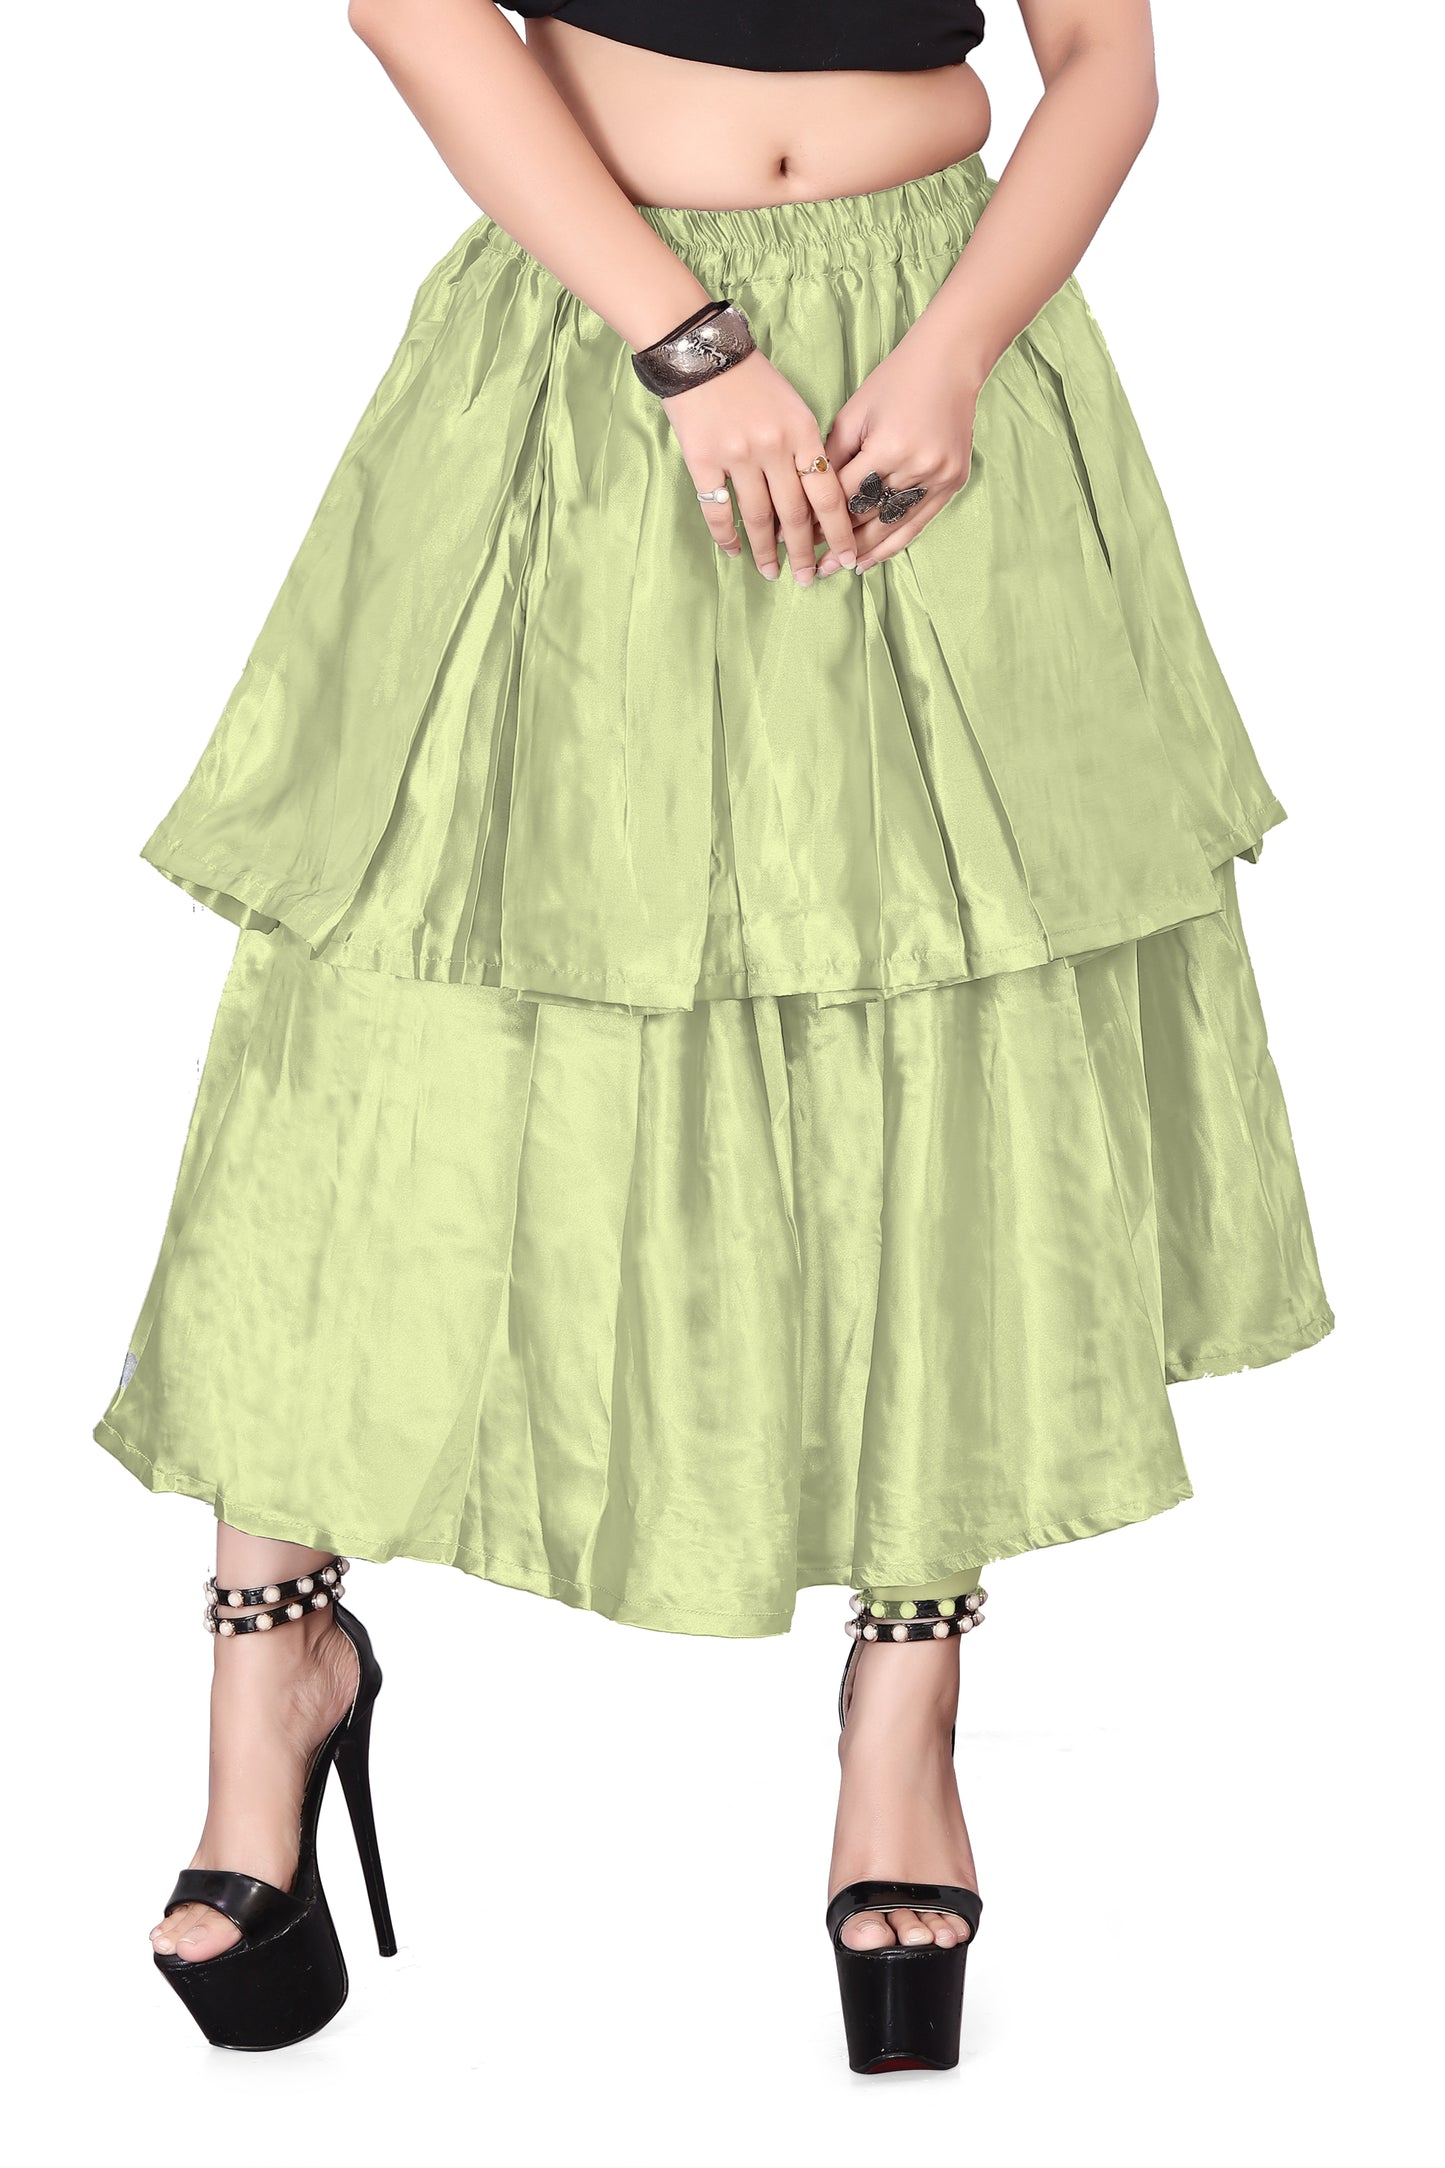 Satin 2 Layer Party wear Skirt S101-Regular Size 1